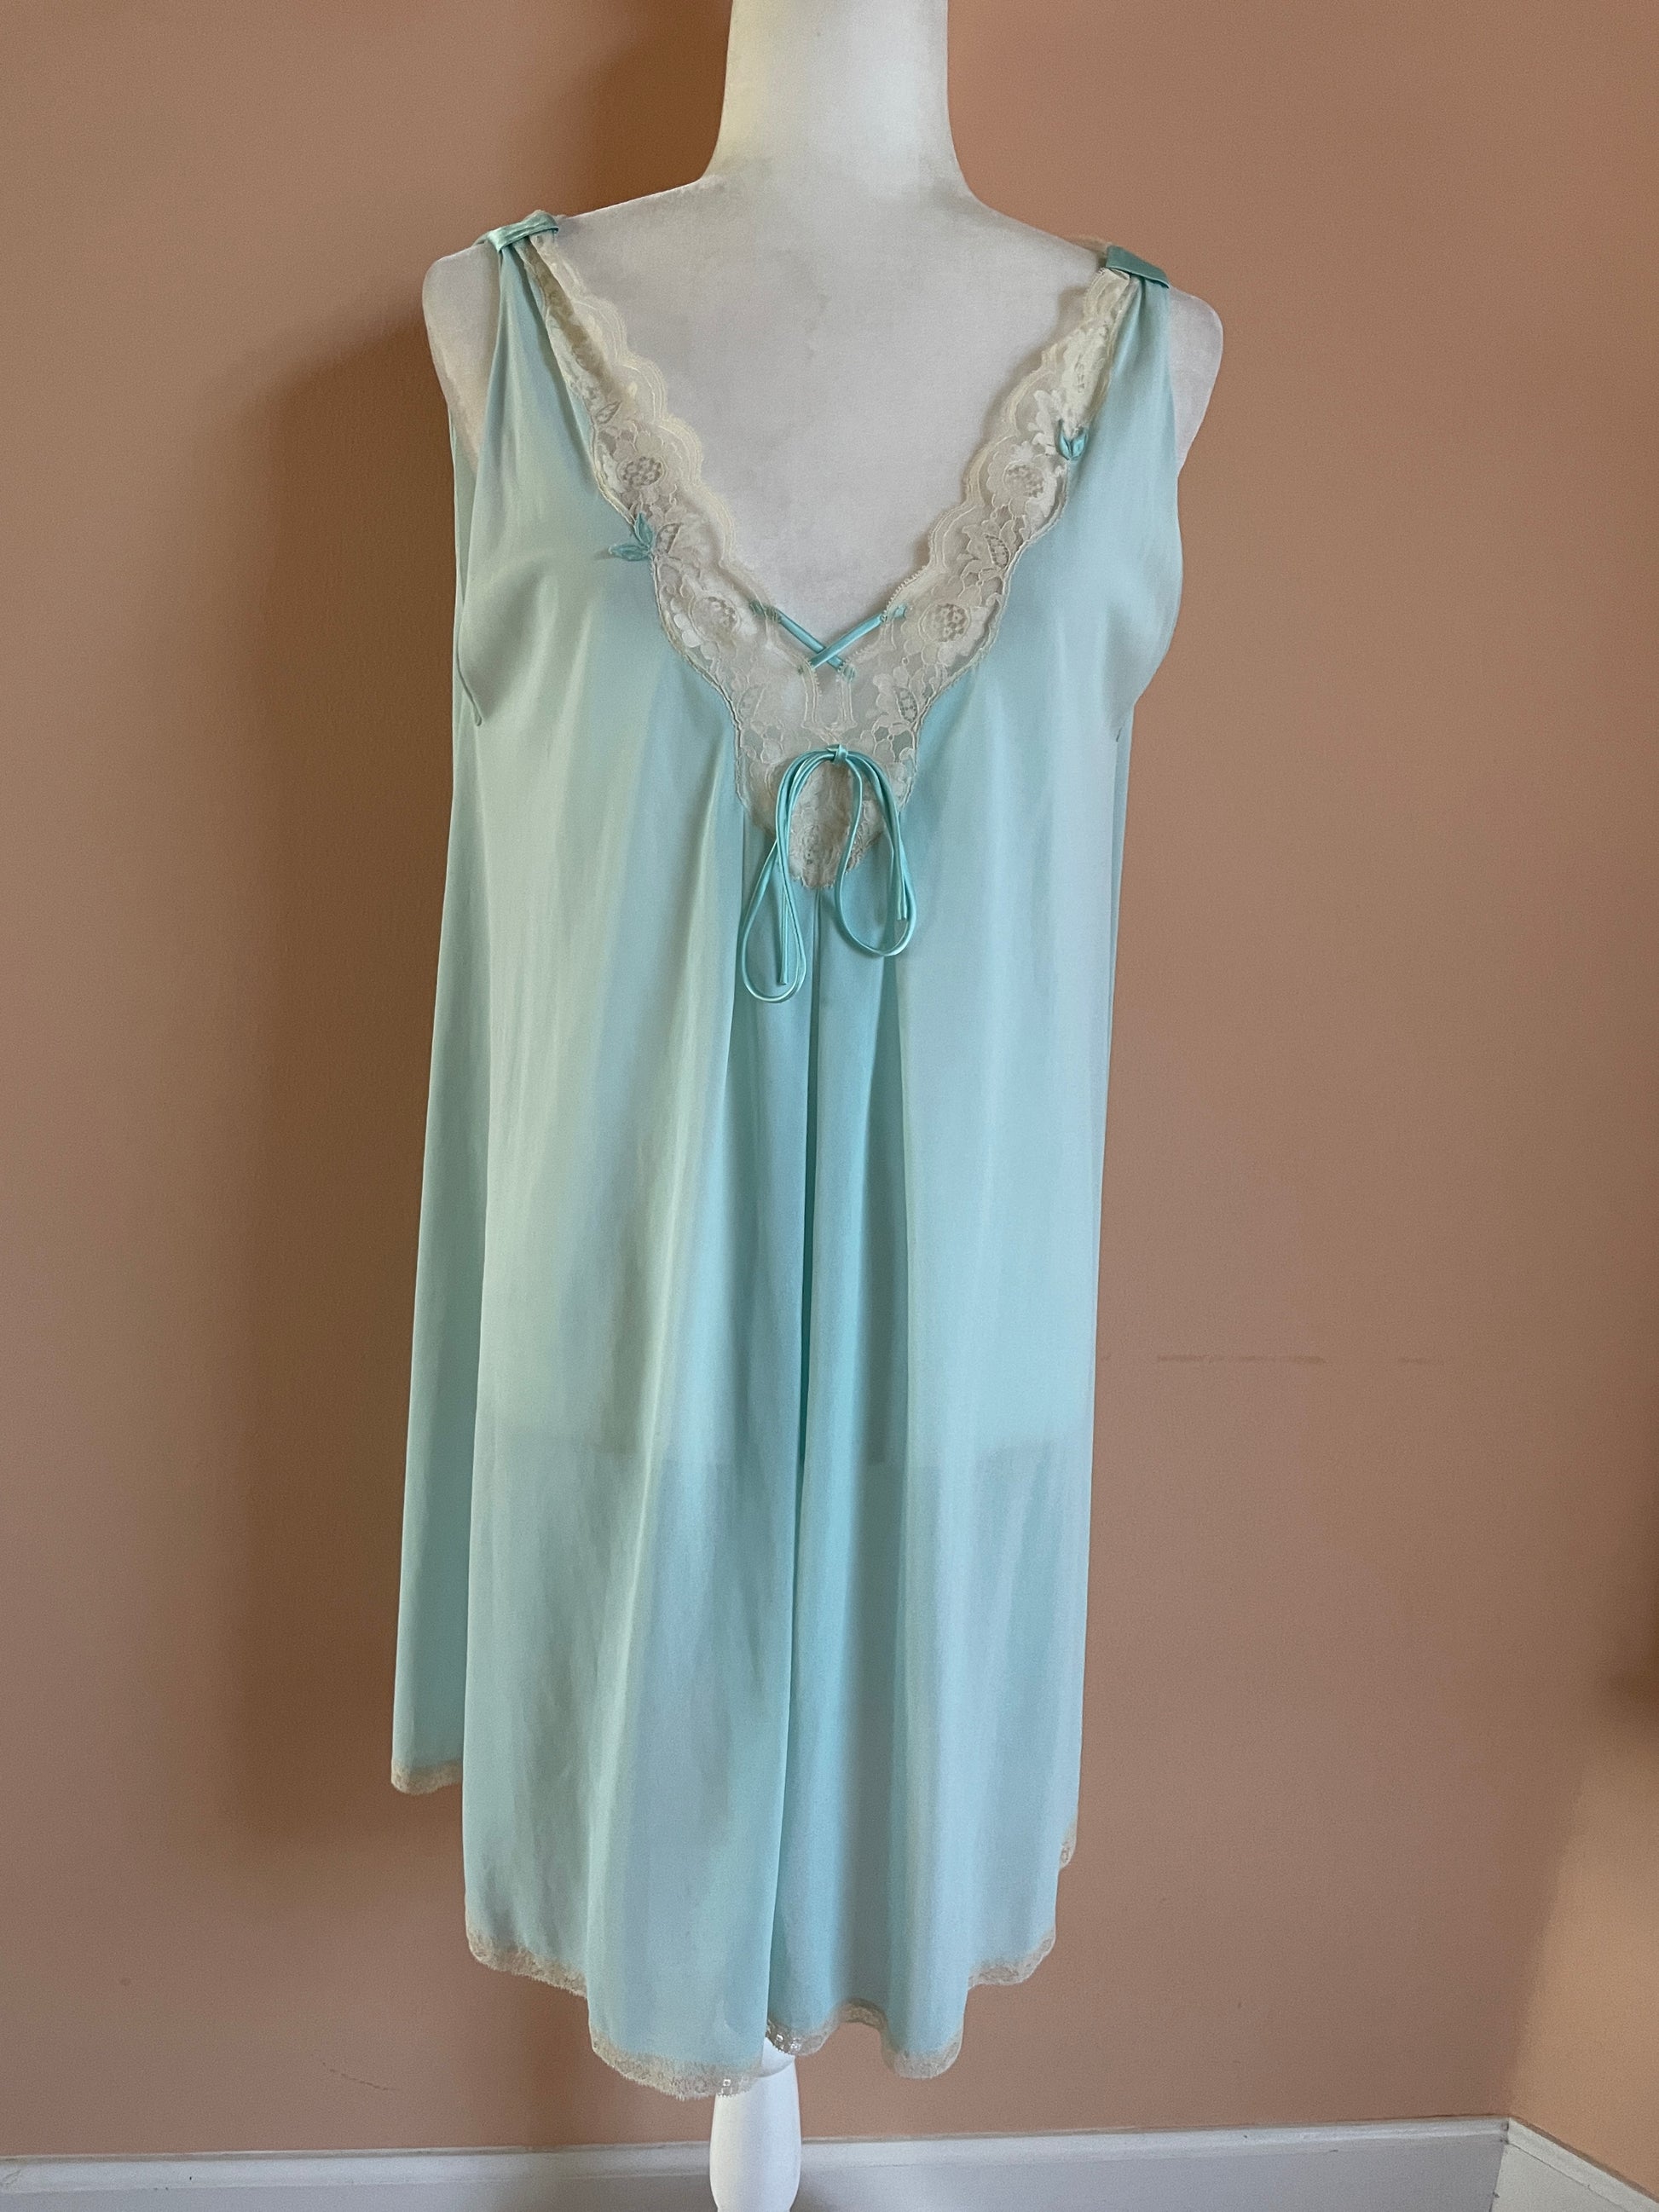 1970's lingerie nightgown 80s Vintage Blue Lacy Lingerie Nightgown M